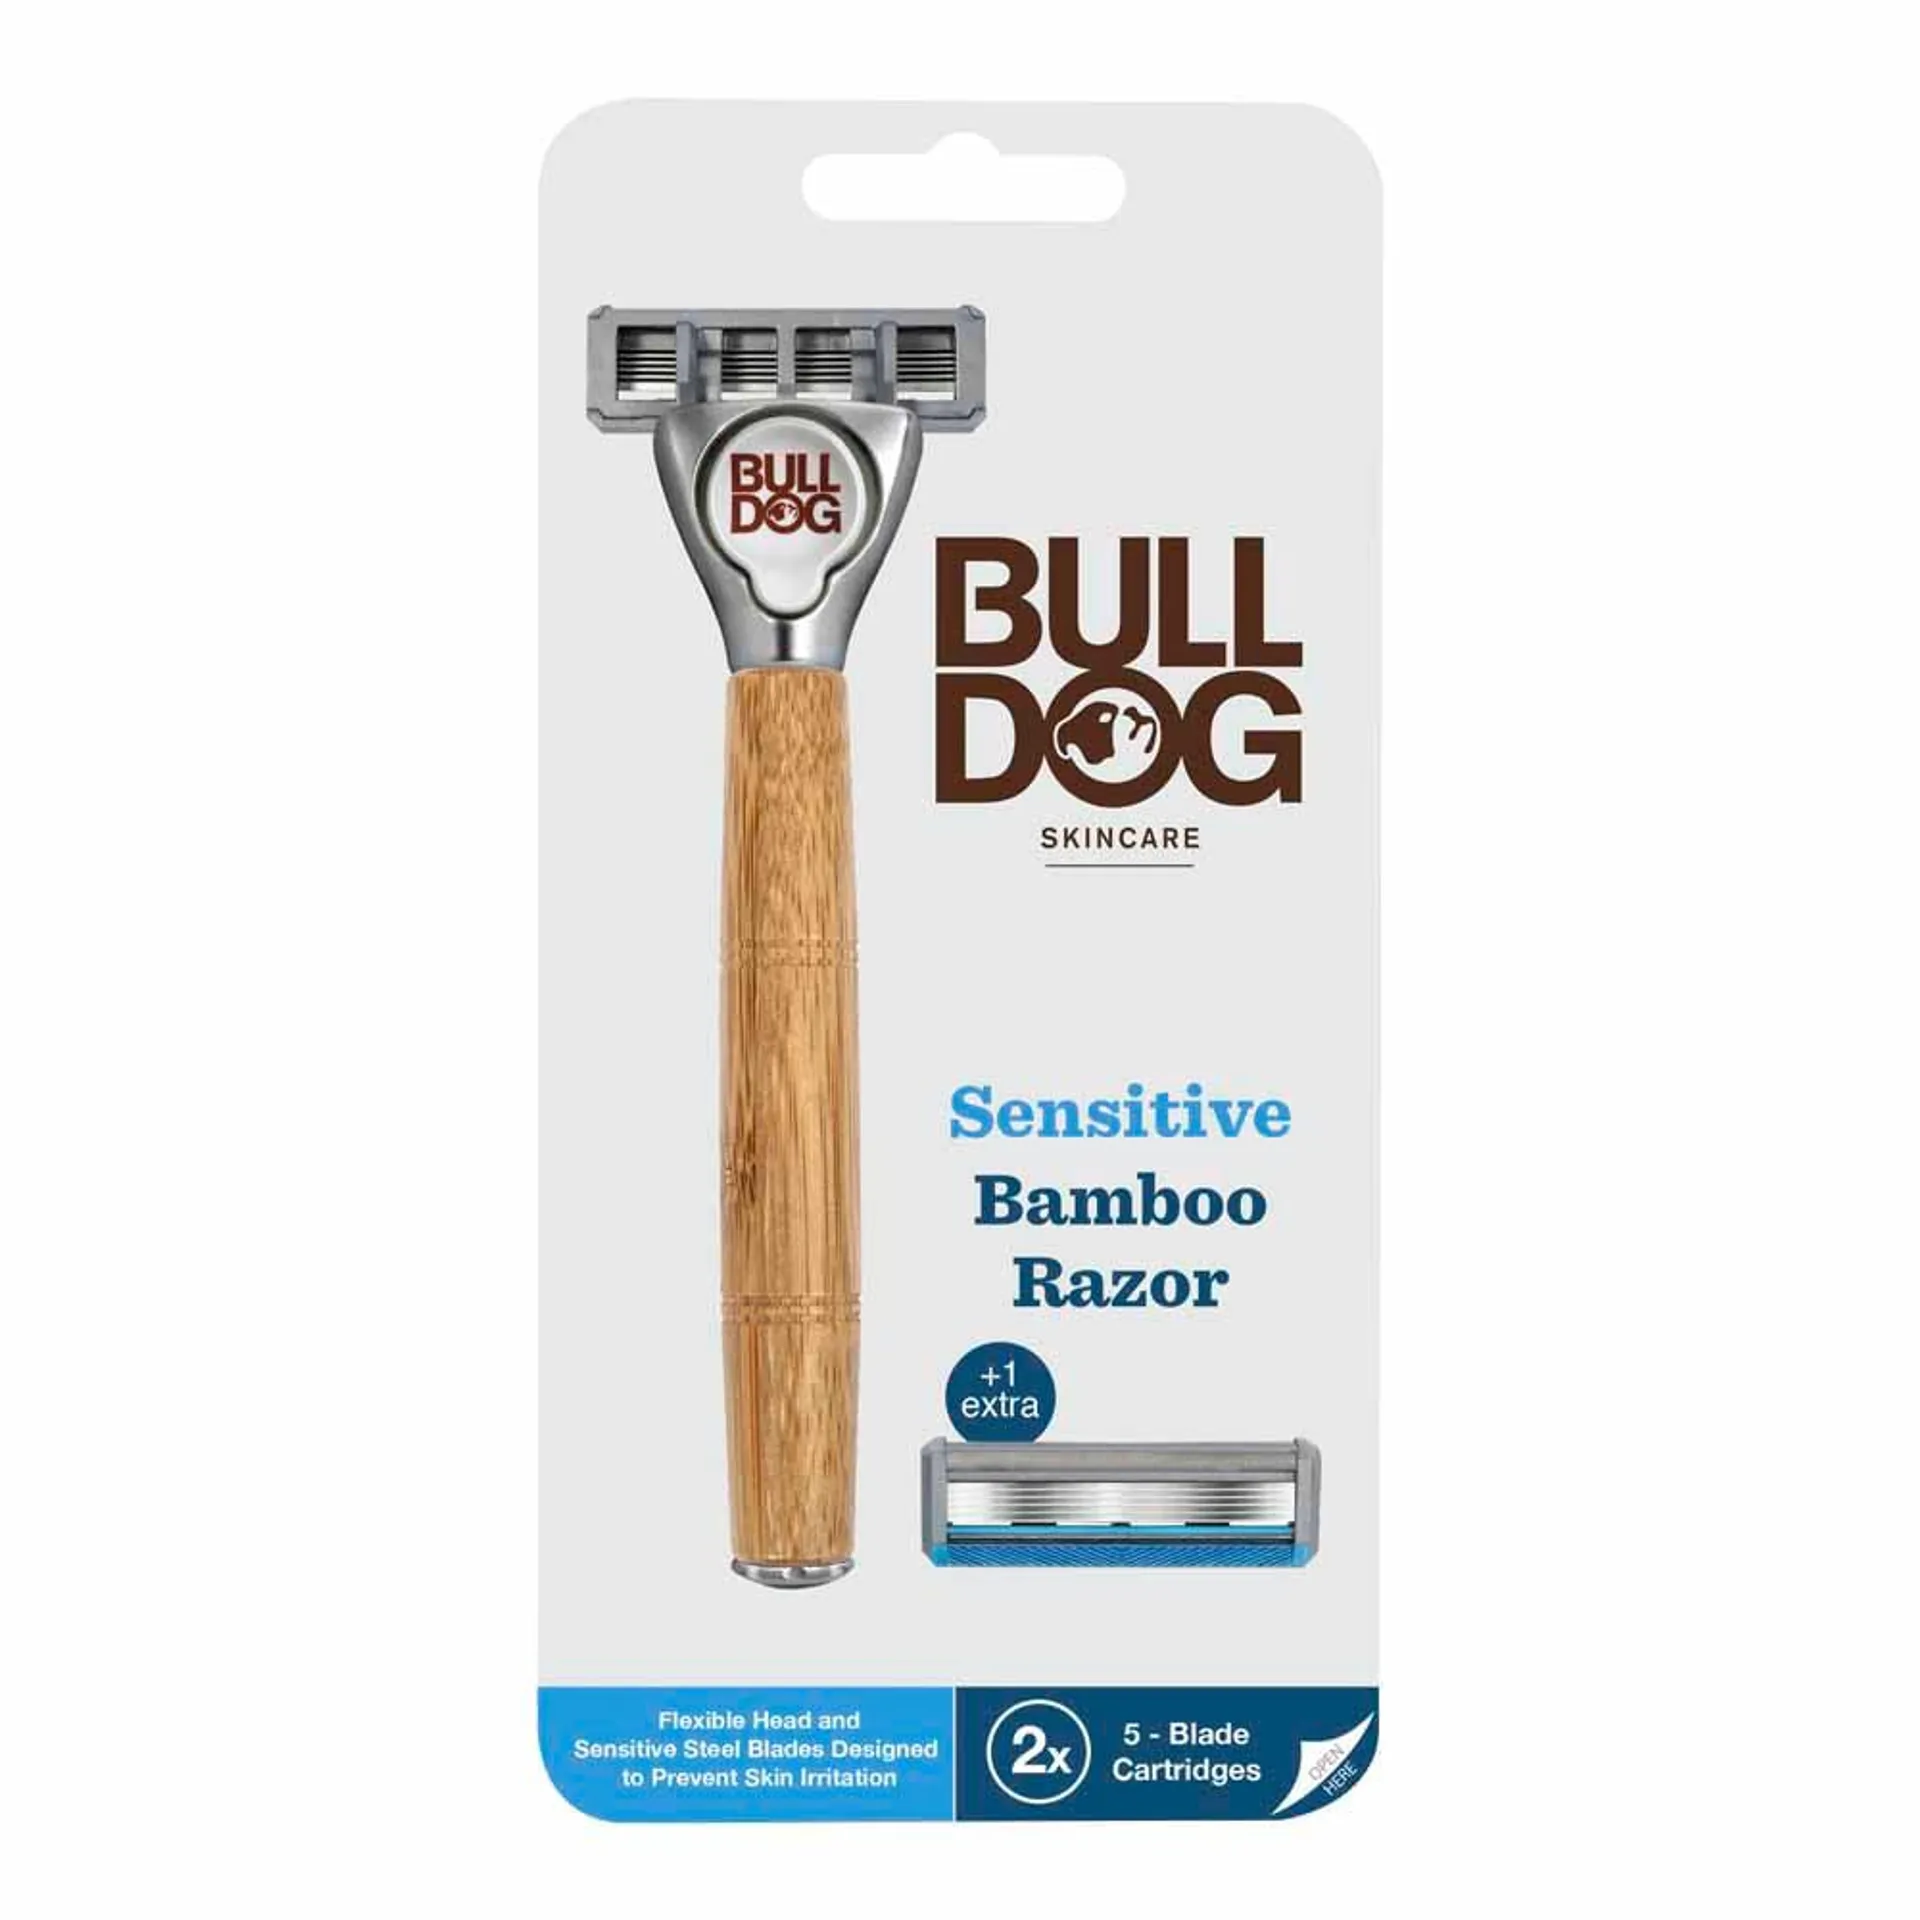 Bulldog Sensitive Bamboo Razor + 1 Blade